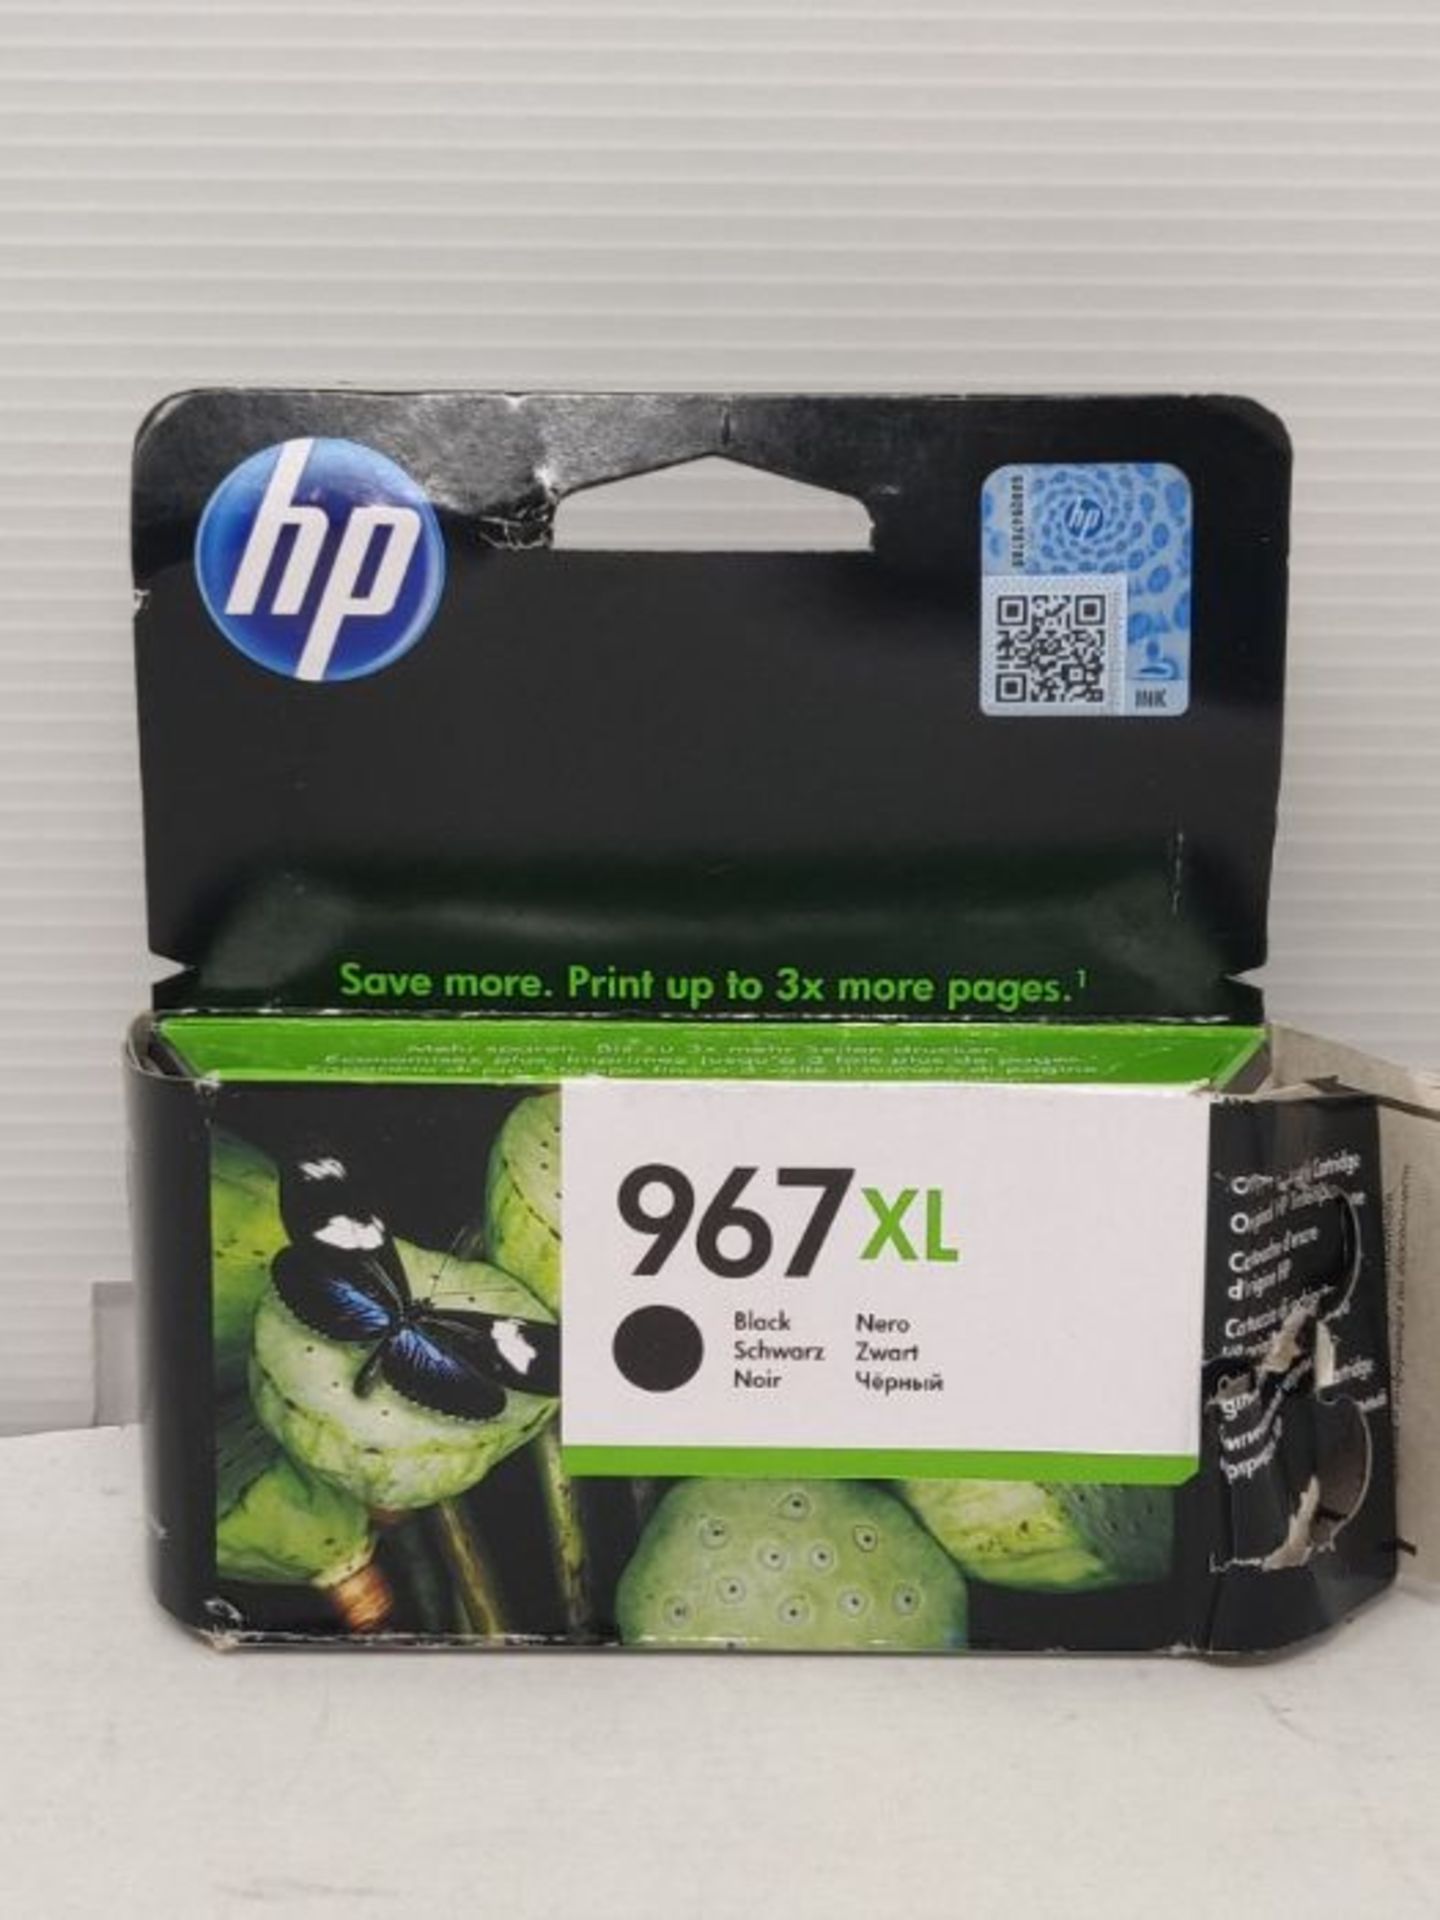 HP 3JA31AE 967XL Extra High Yield Original Ink Cartridge, Black, Single Pack - Image 2 of 3